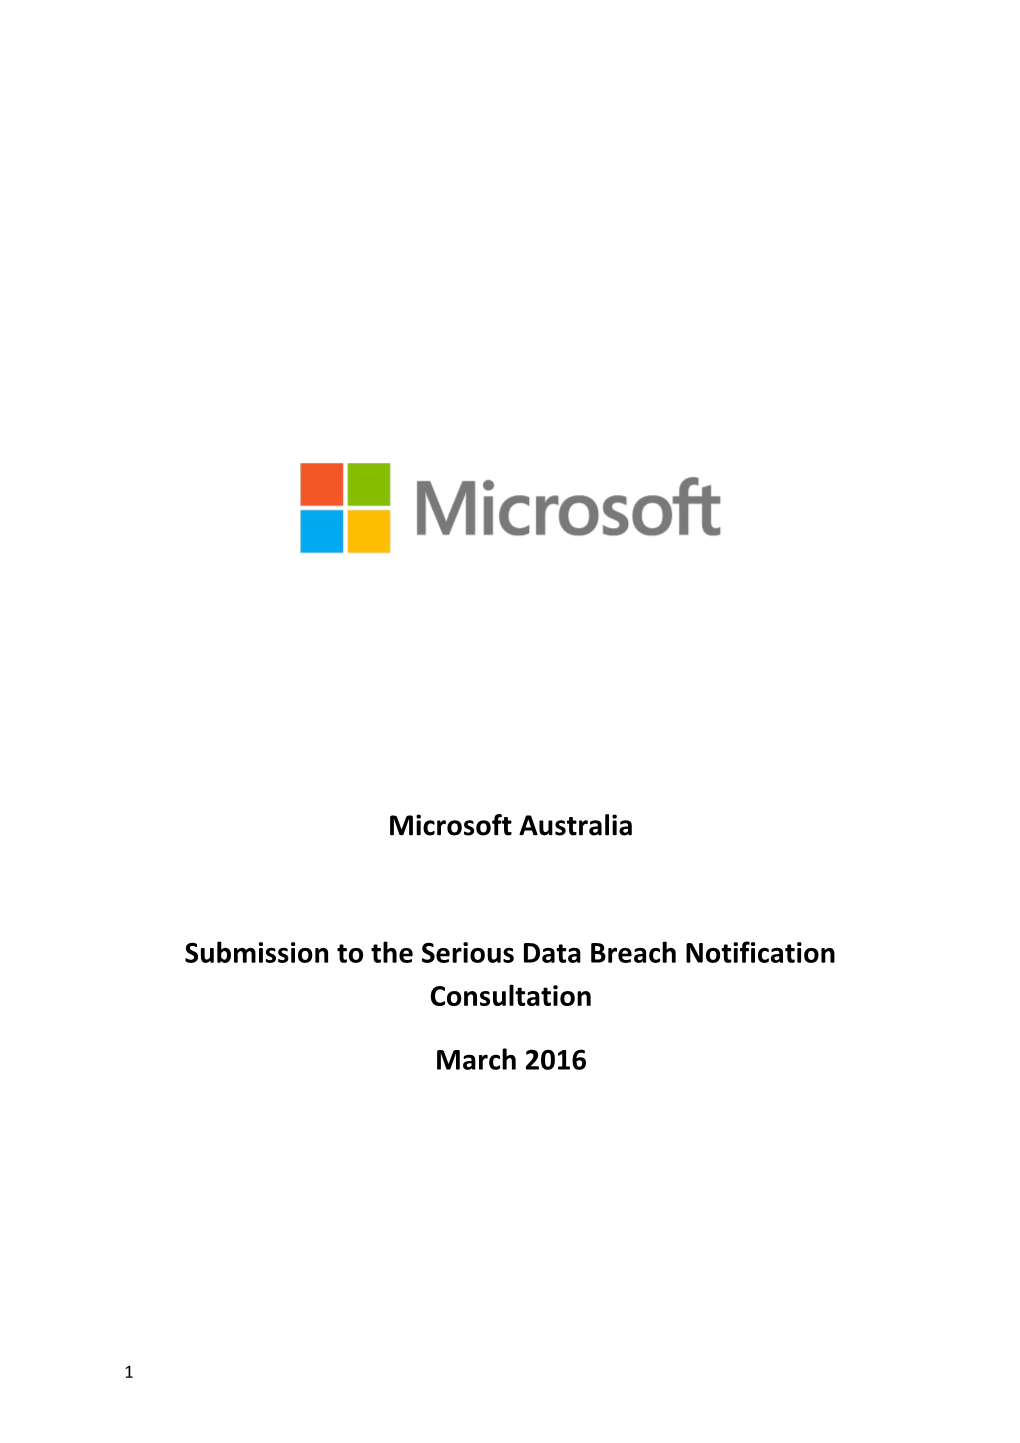 Serious Data Breach Notification Consultation - Microsoft